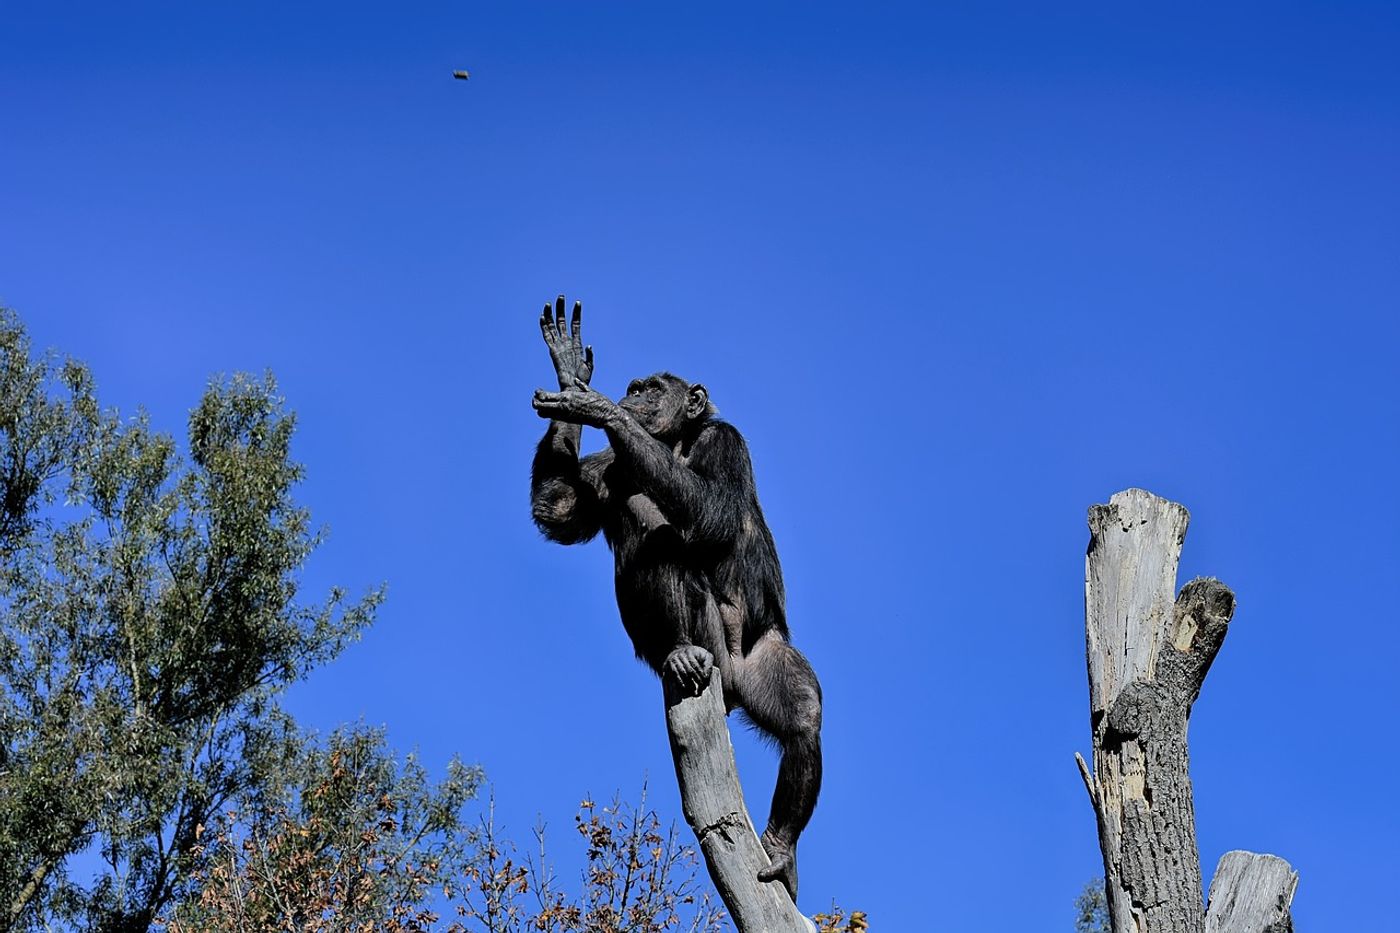 A chimpanzee in a tree.